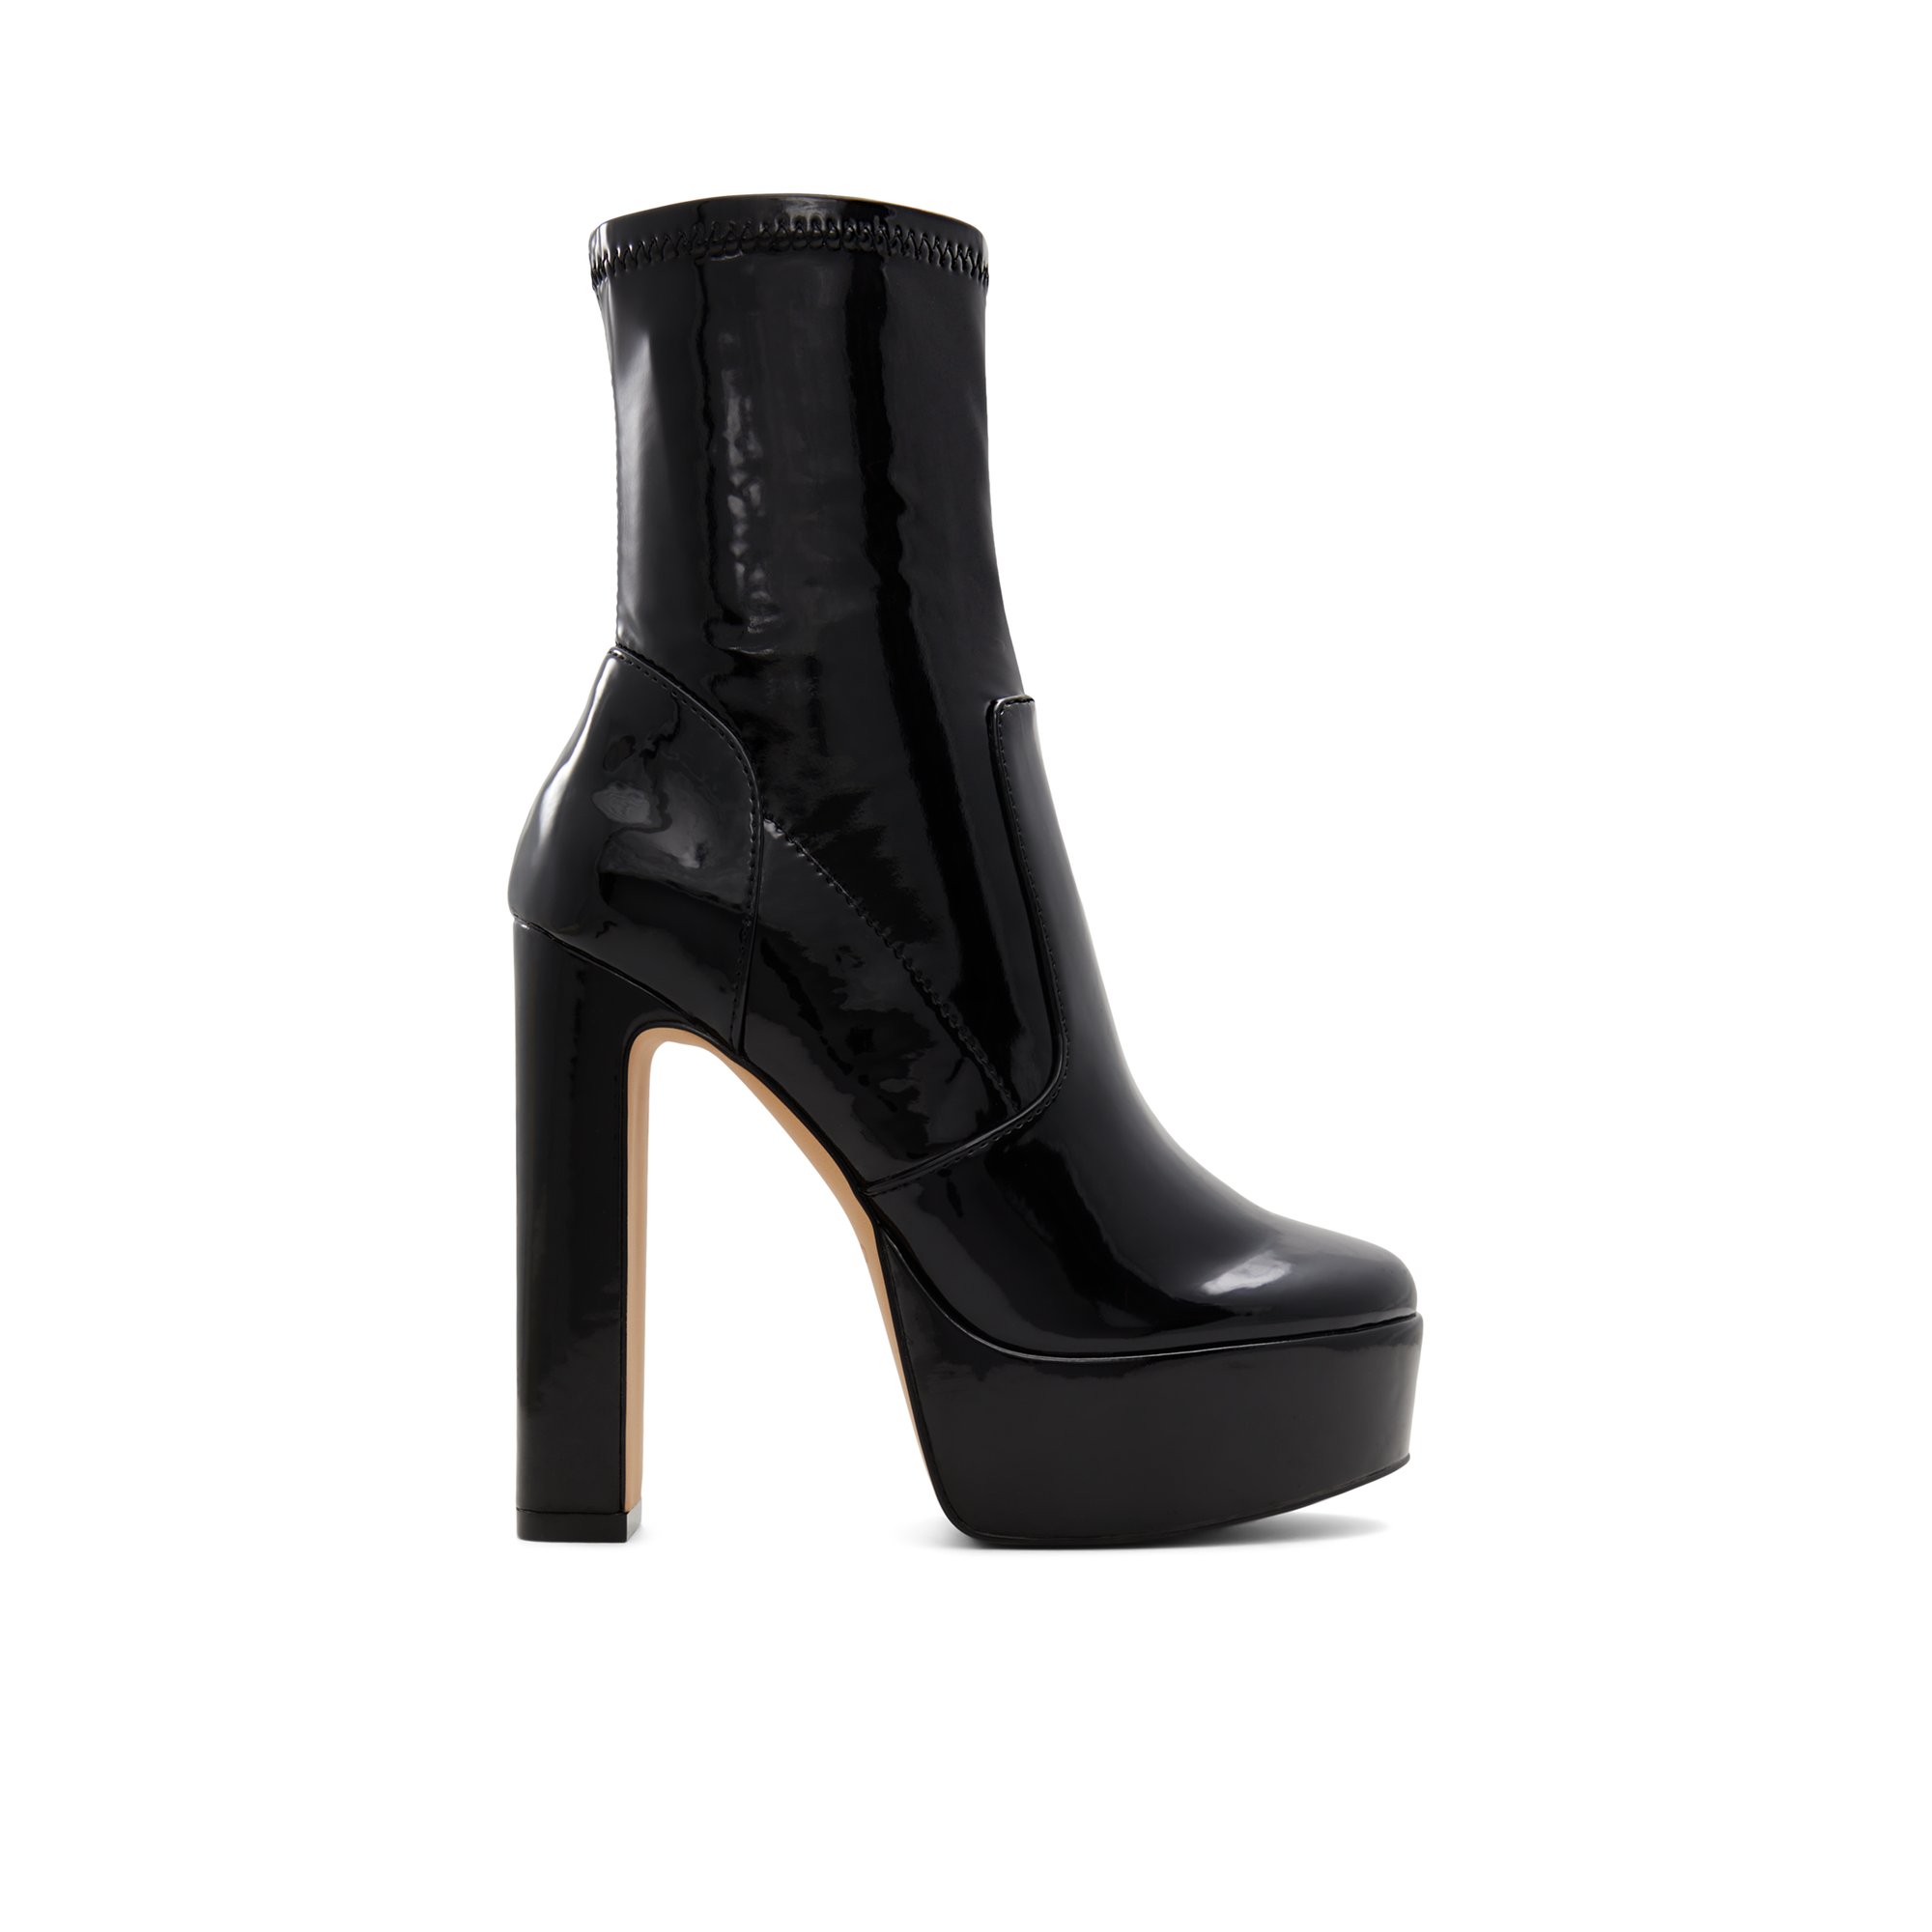 ALDO Brejar - Women's Dress Boot - Black